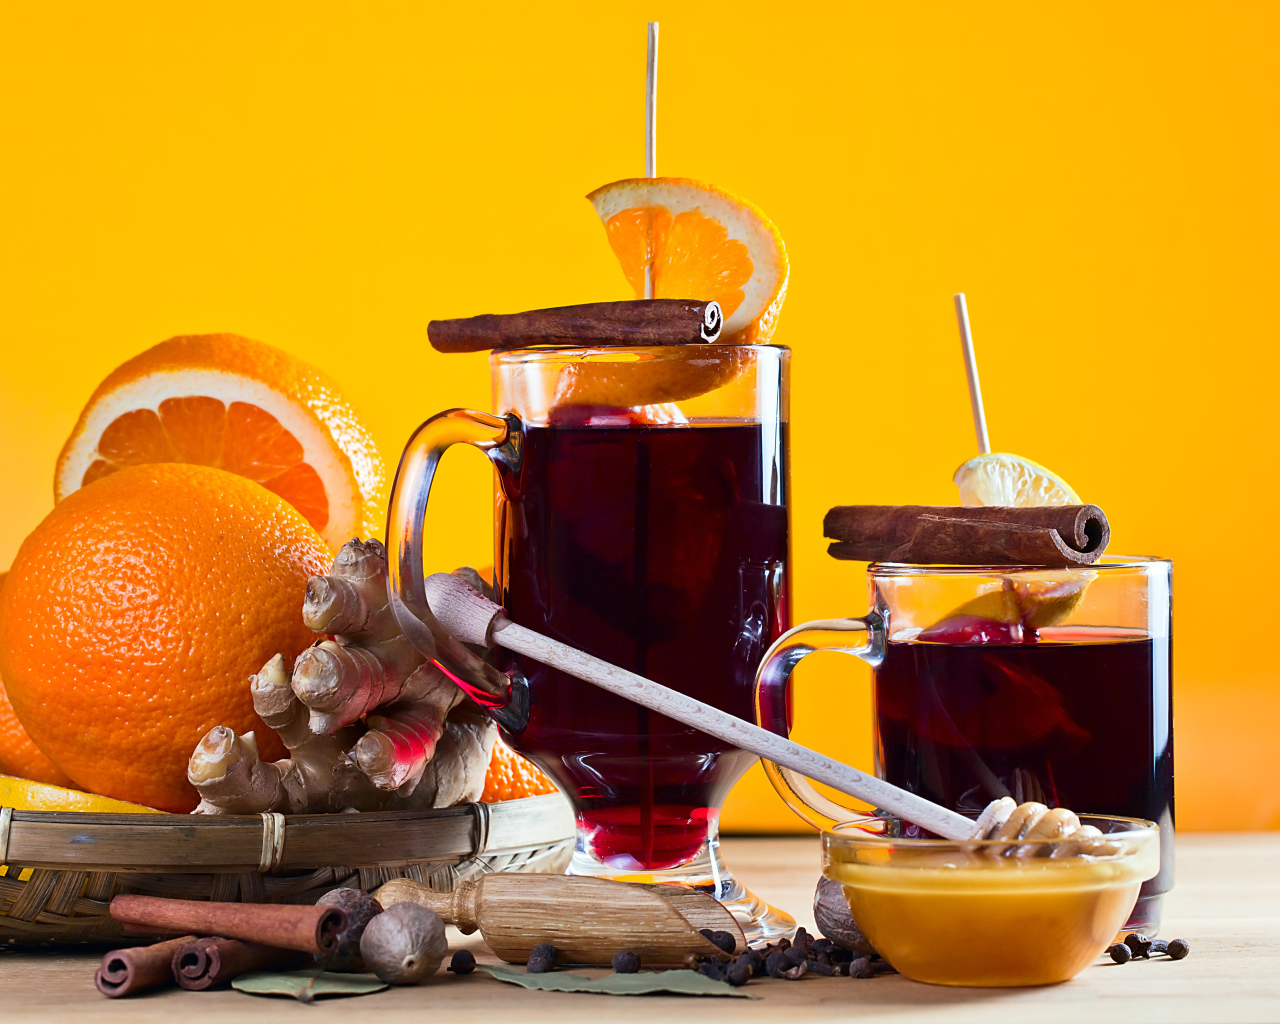 Глинтвейн на столе с имбирем, апельсино и специями